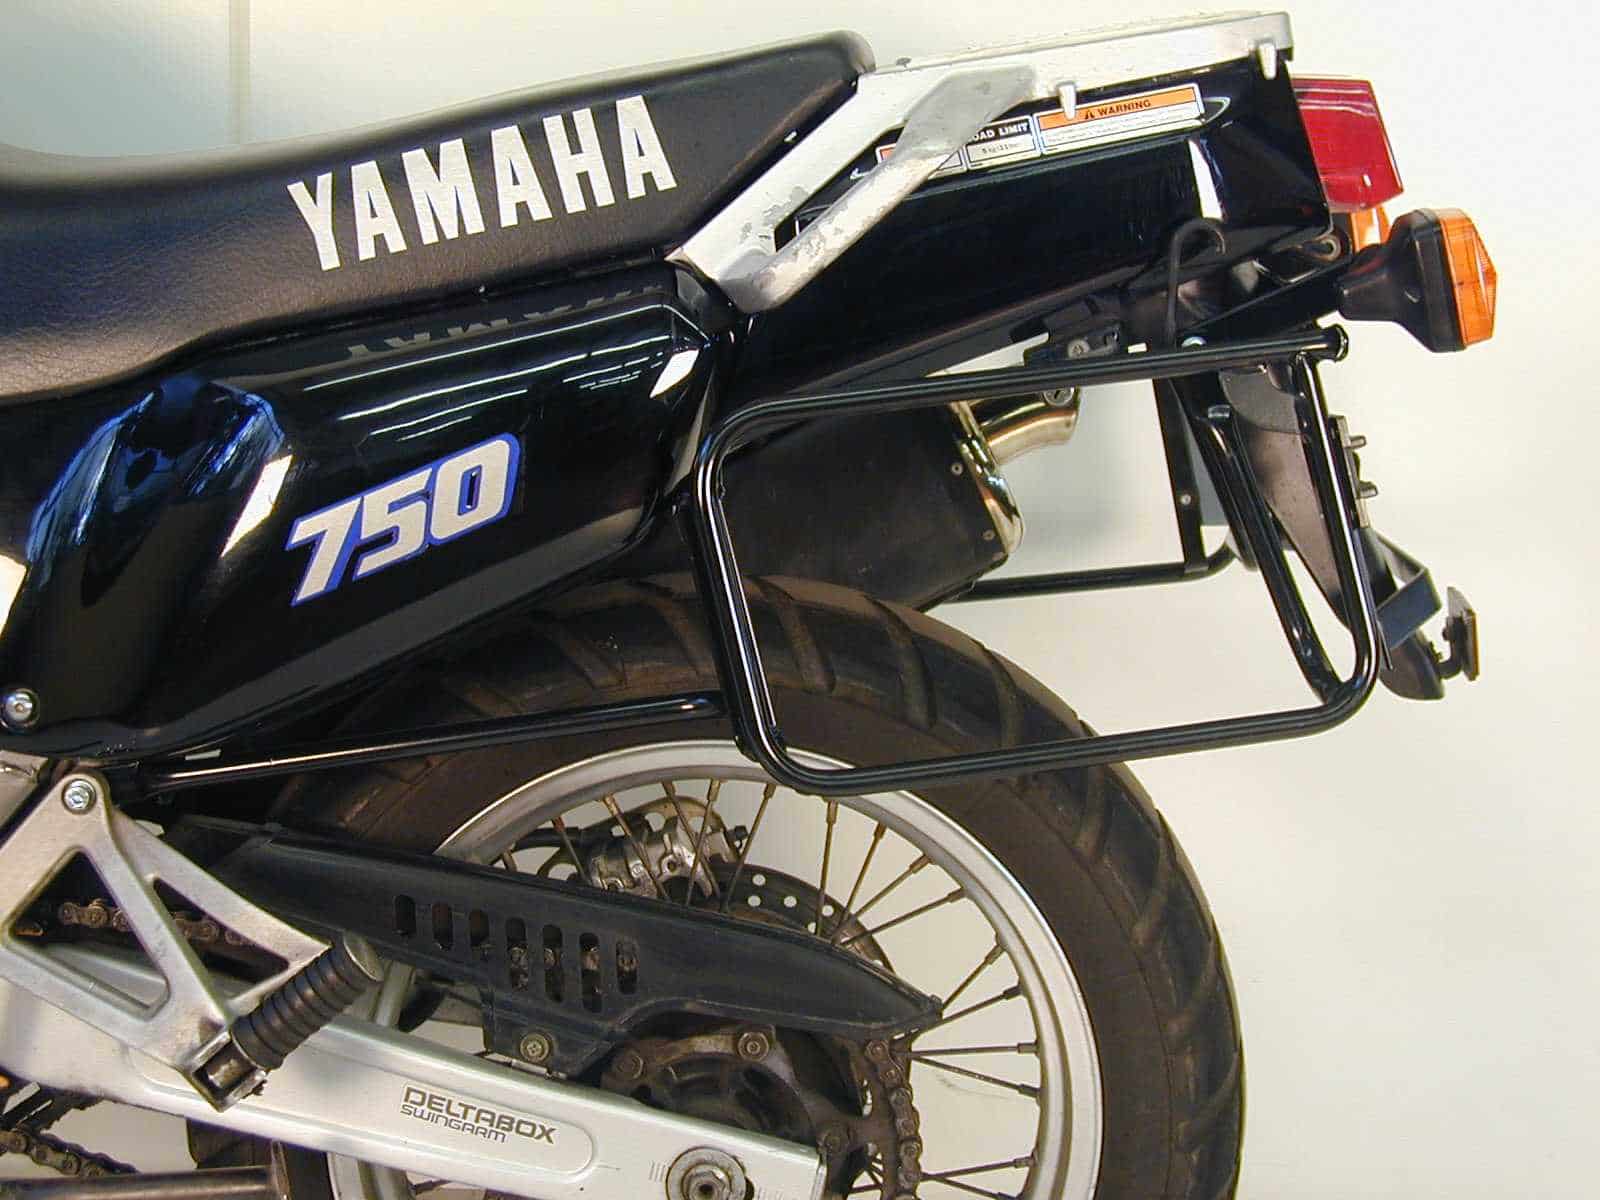 Seitenkofferträger festverschraubt schwarz für Yamaha XTZ 750 Super Ténéré (1989-1997)